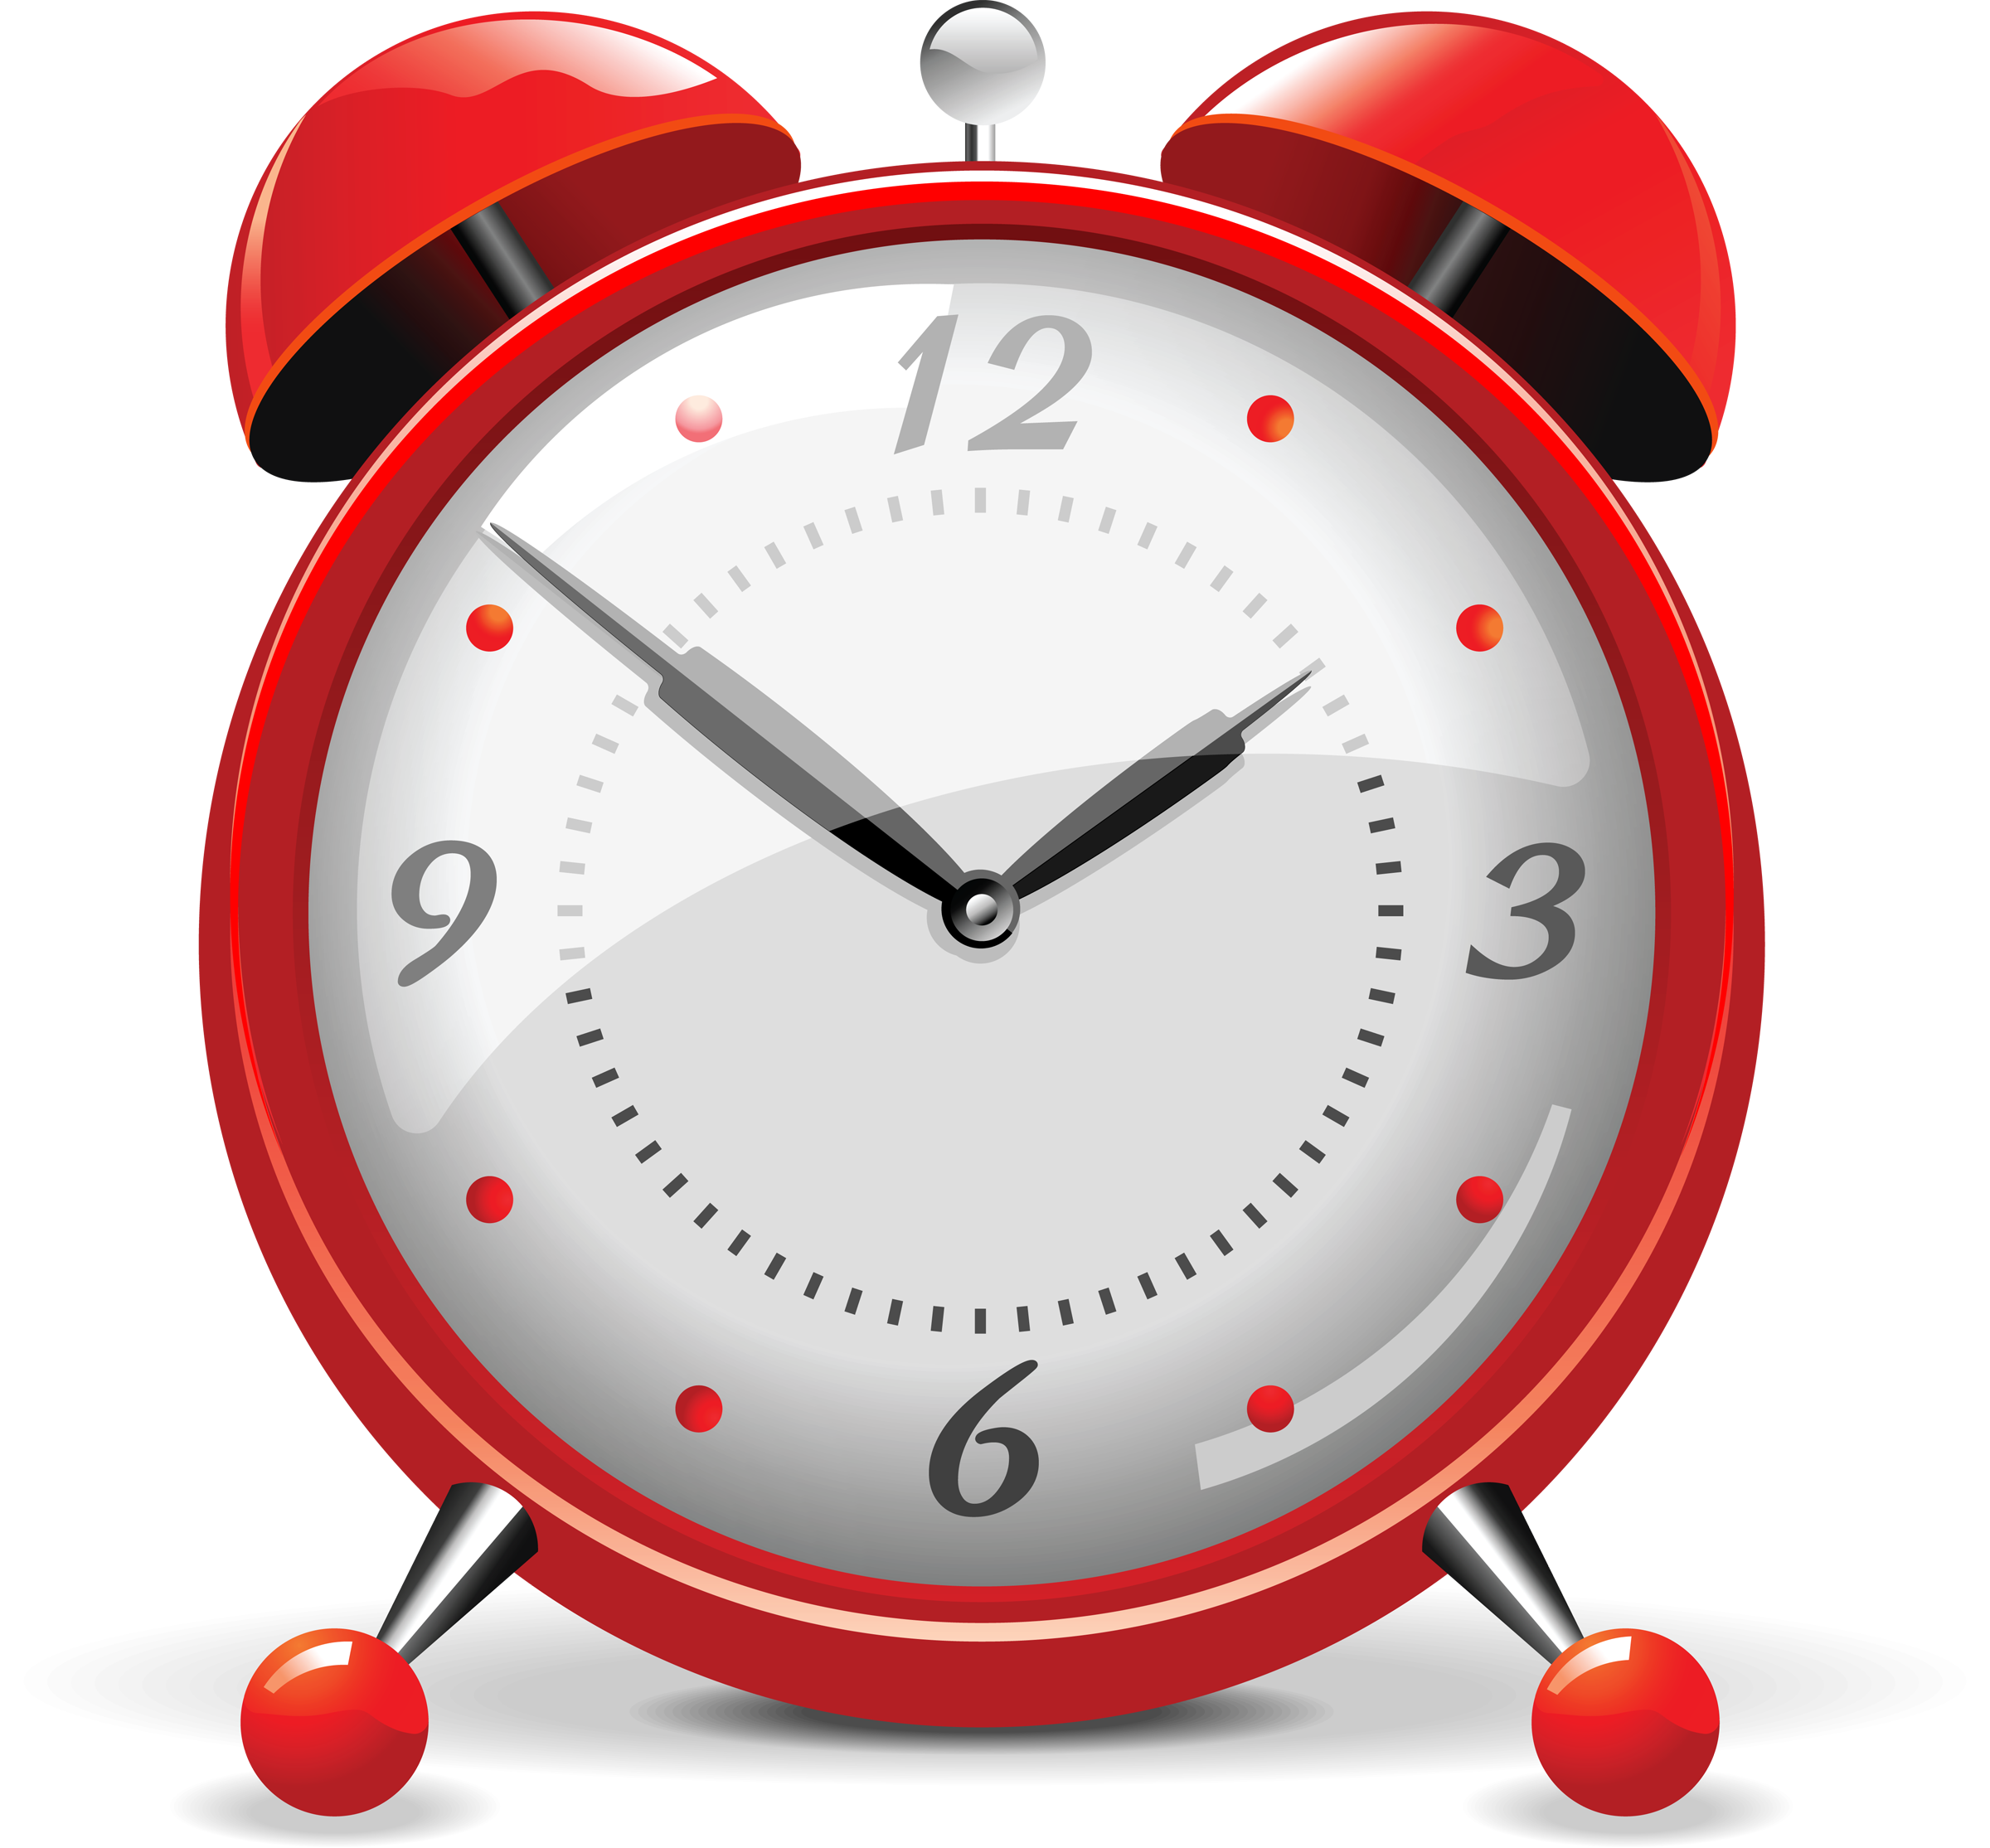 Red Alarm Clock PNG Image - PurePNG | Free transparent CC0 ...